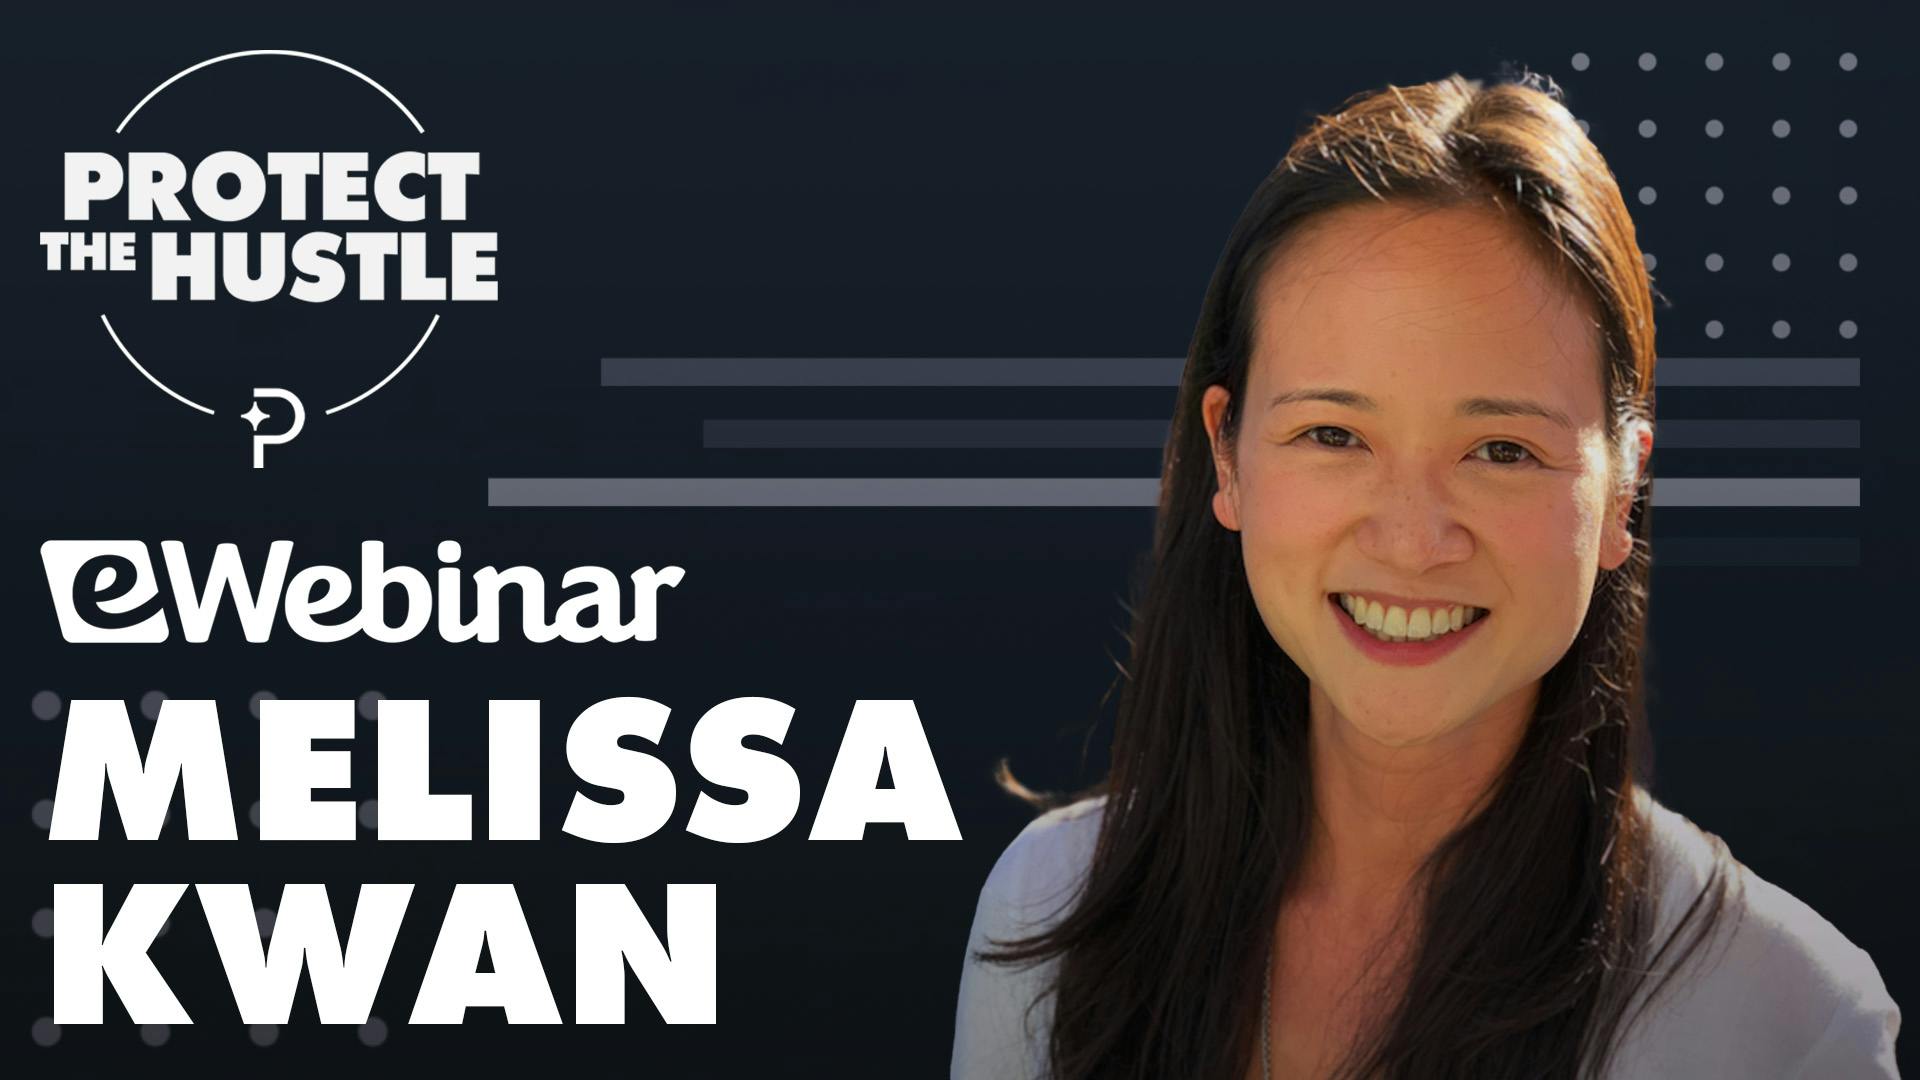 Protect the Hustle Thumbnail featuring eWebinar's Melissa Kwan